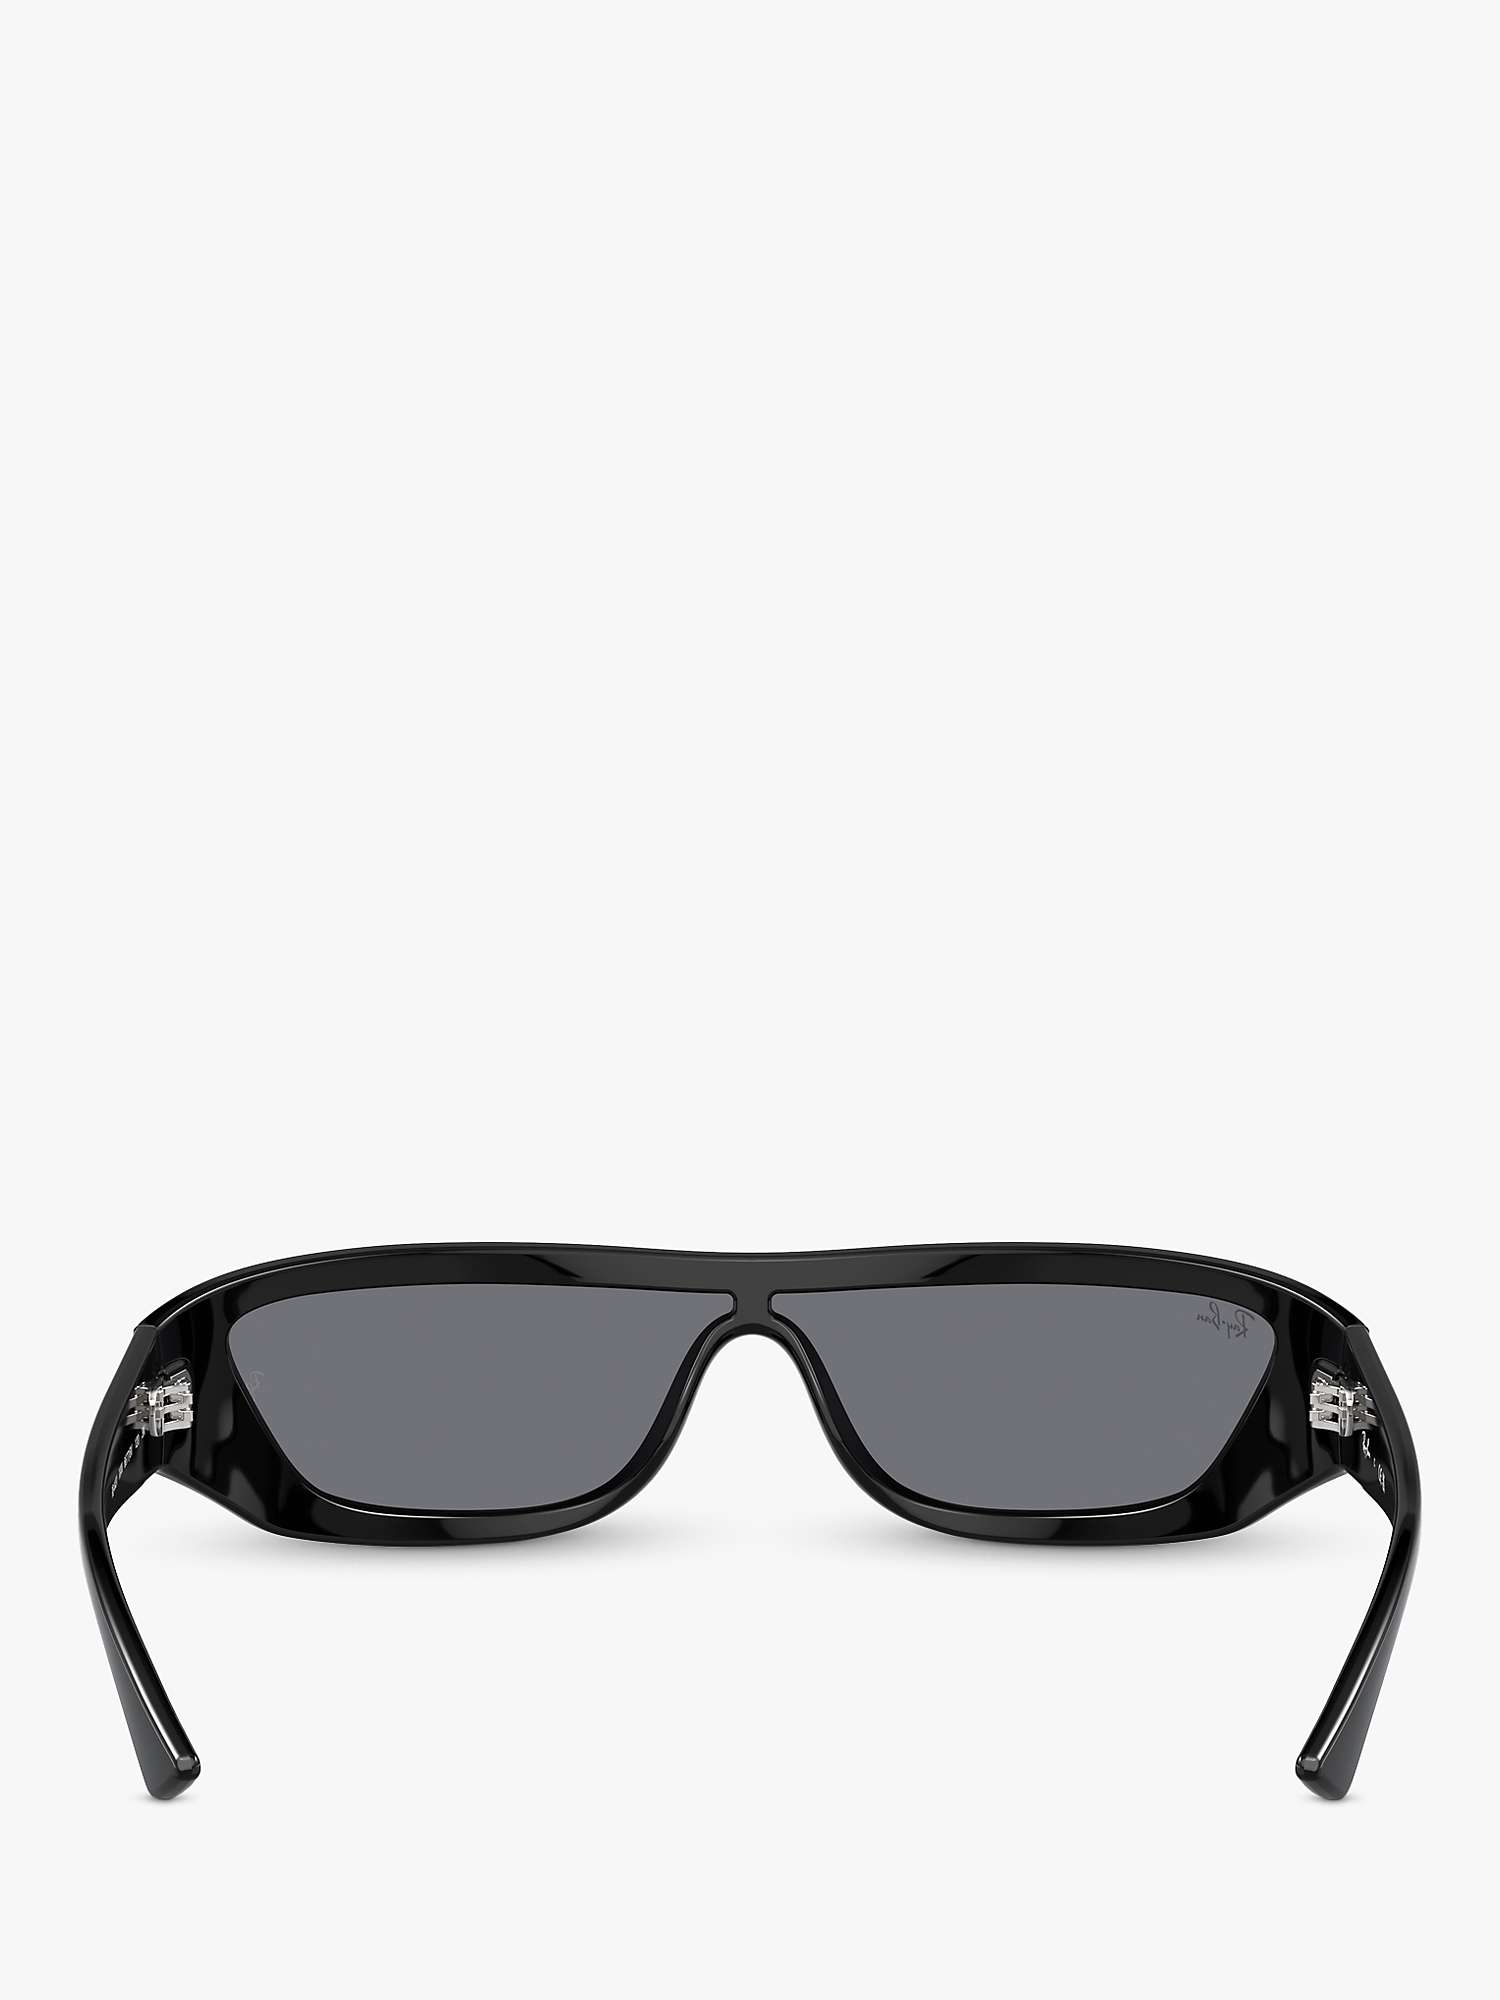 Buy Ray-Ban RB4431 Unisex Xan Wrap Sunglasses, Black/Grey Online at johnlewis.com